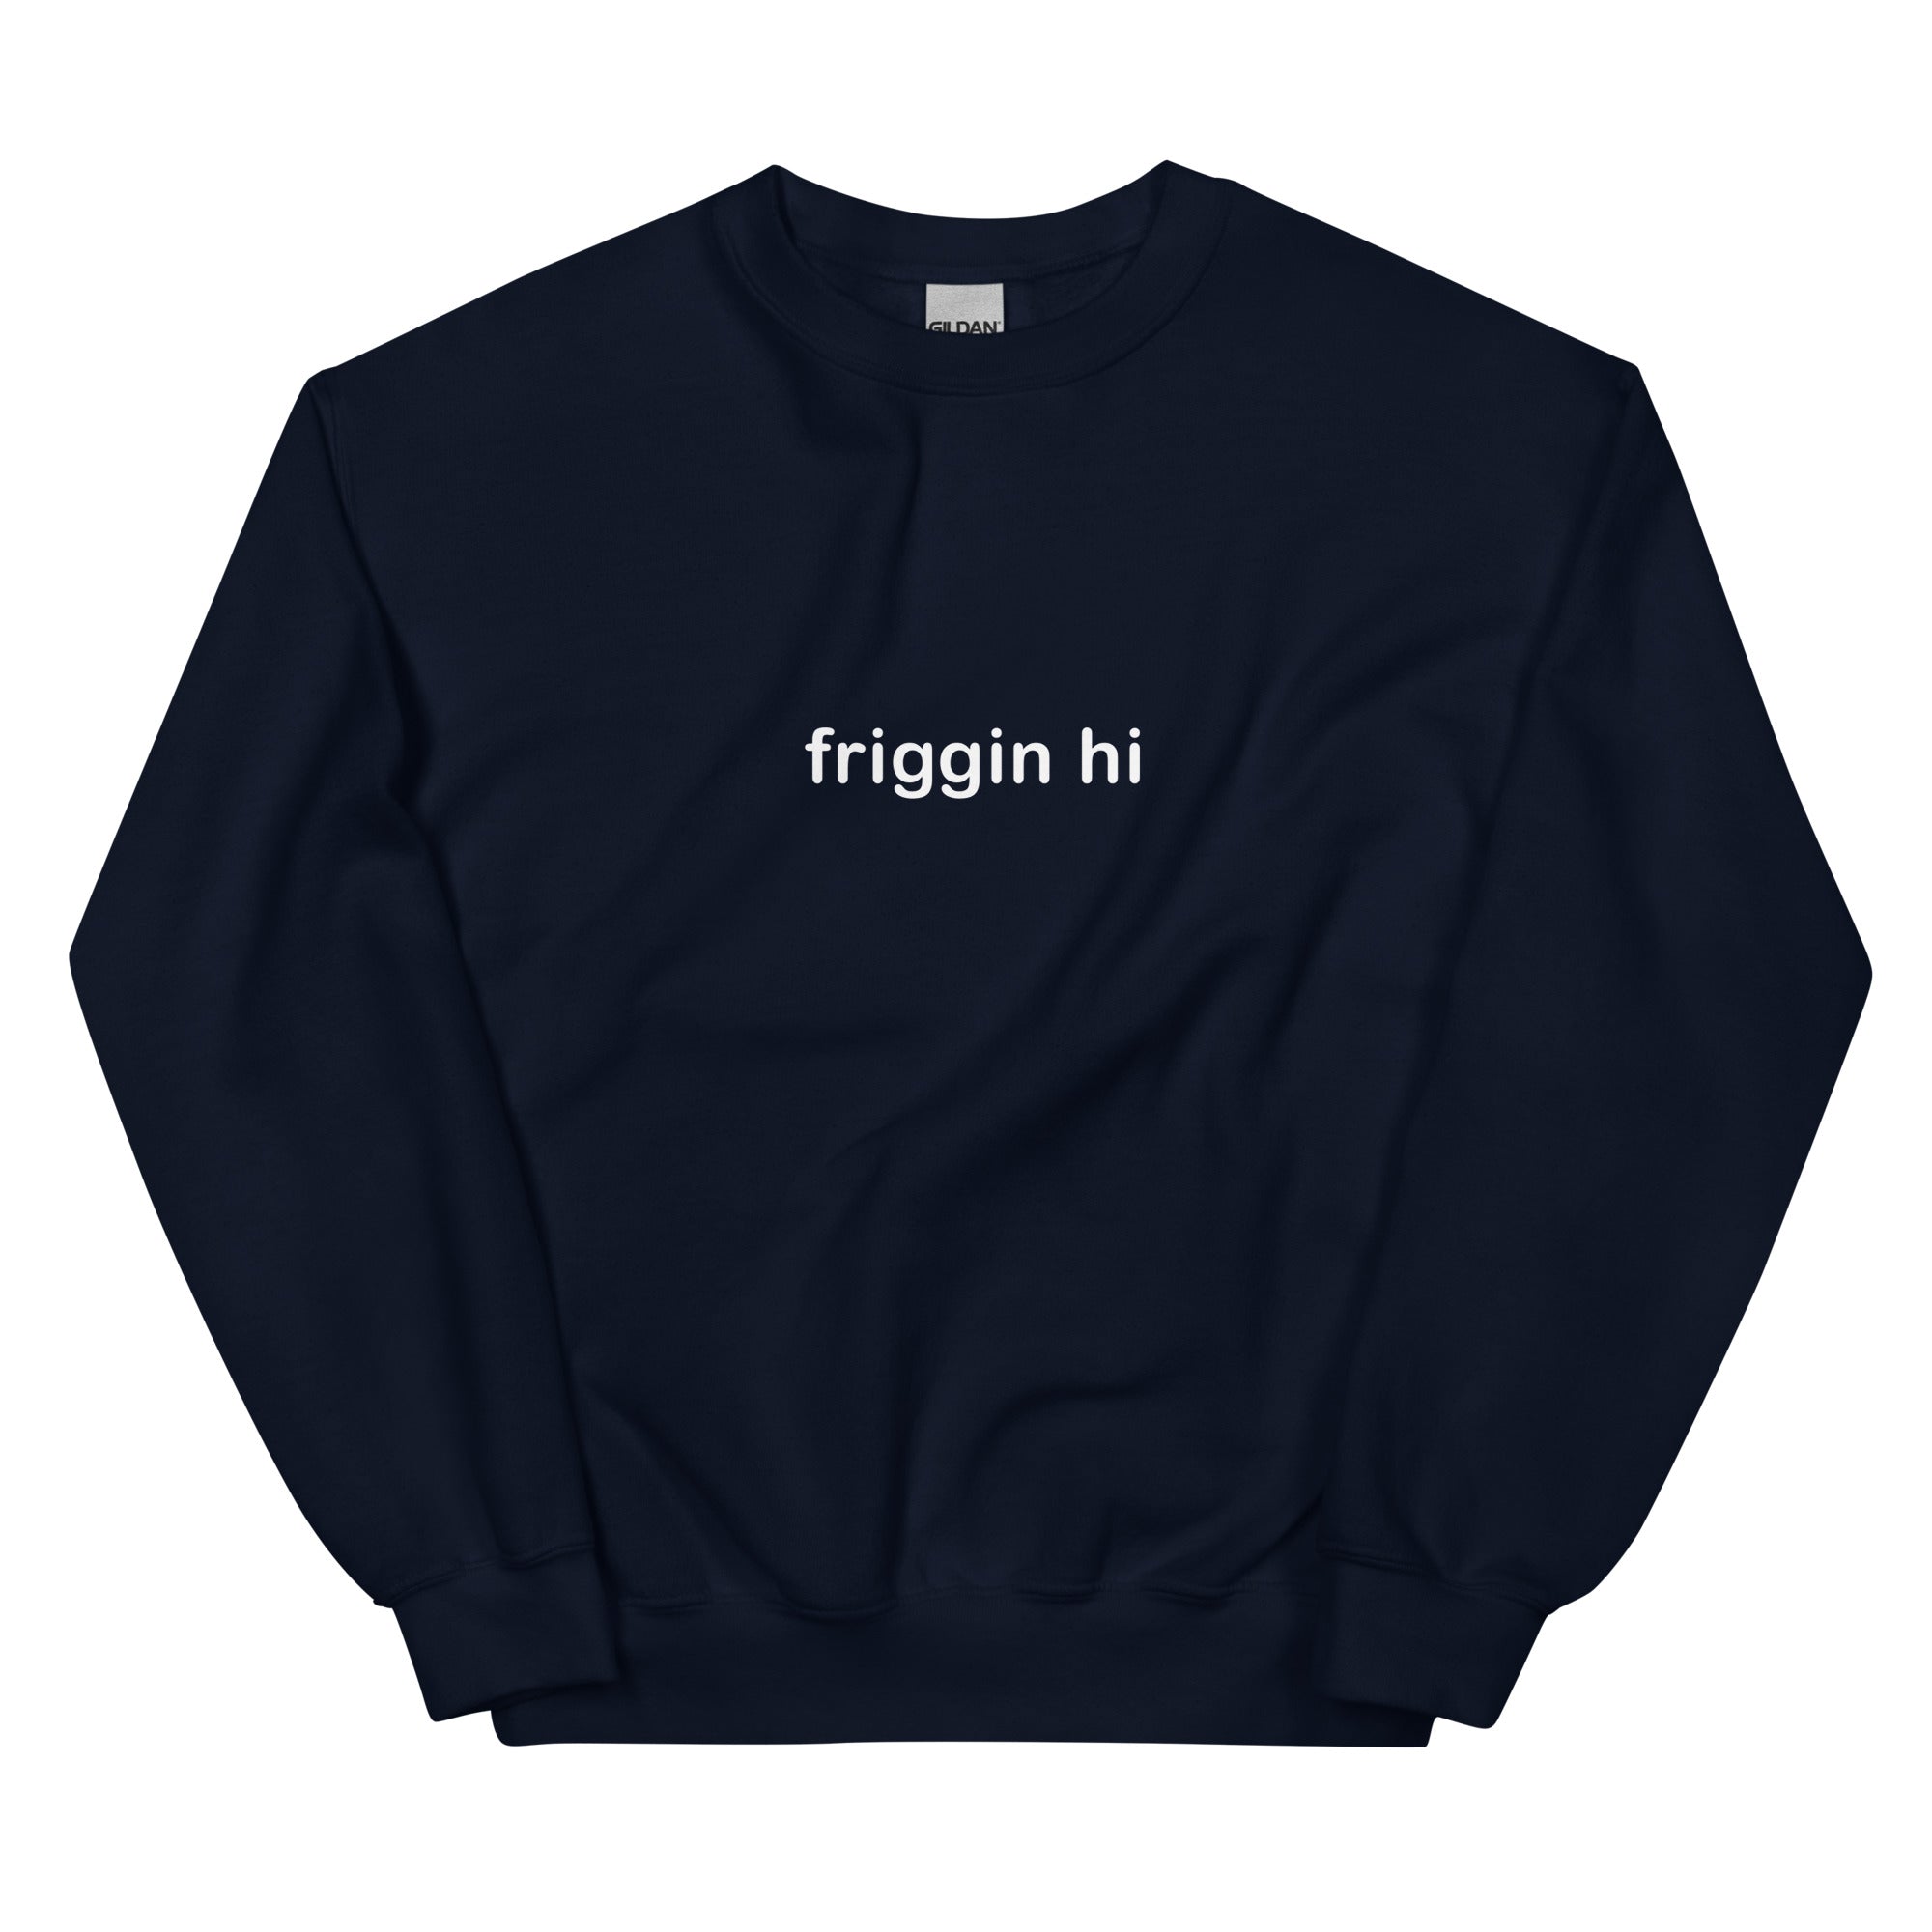 "Friggin Hi, Friggin Bye" White Text Adult Unisex Sweatshirt